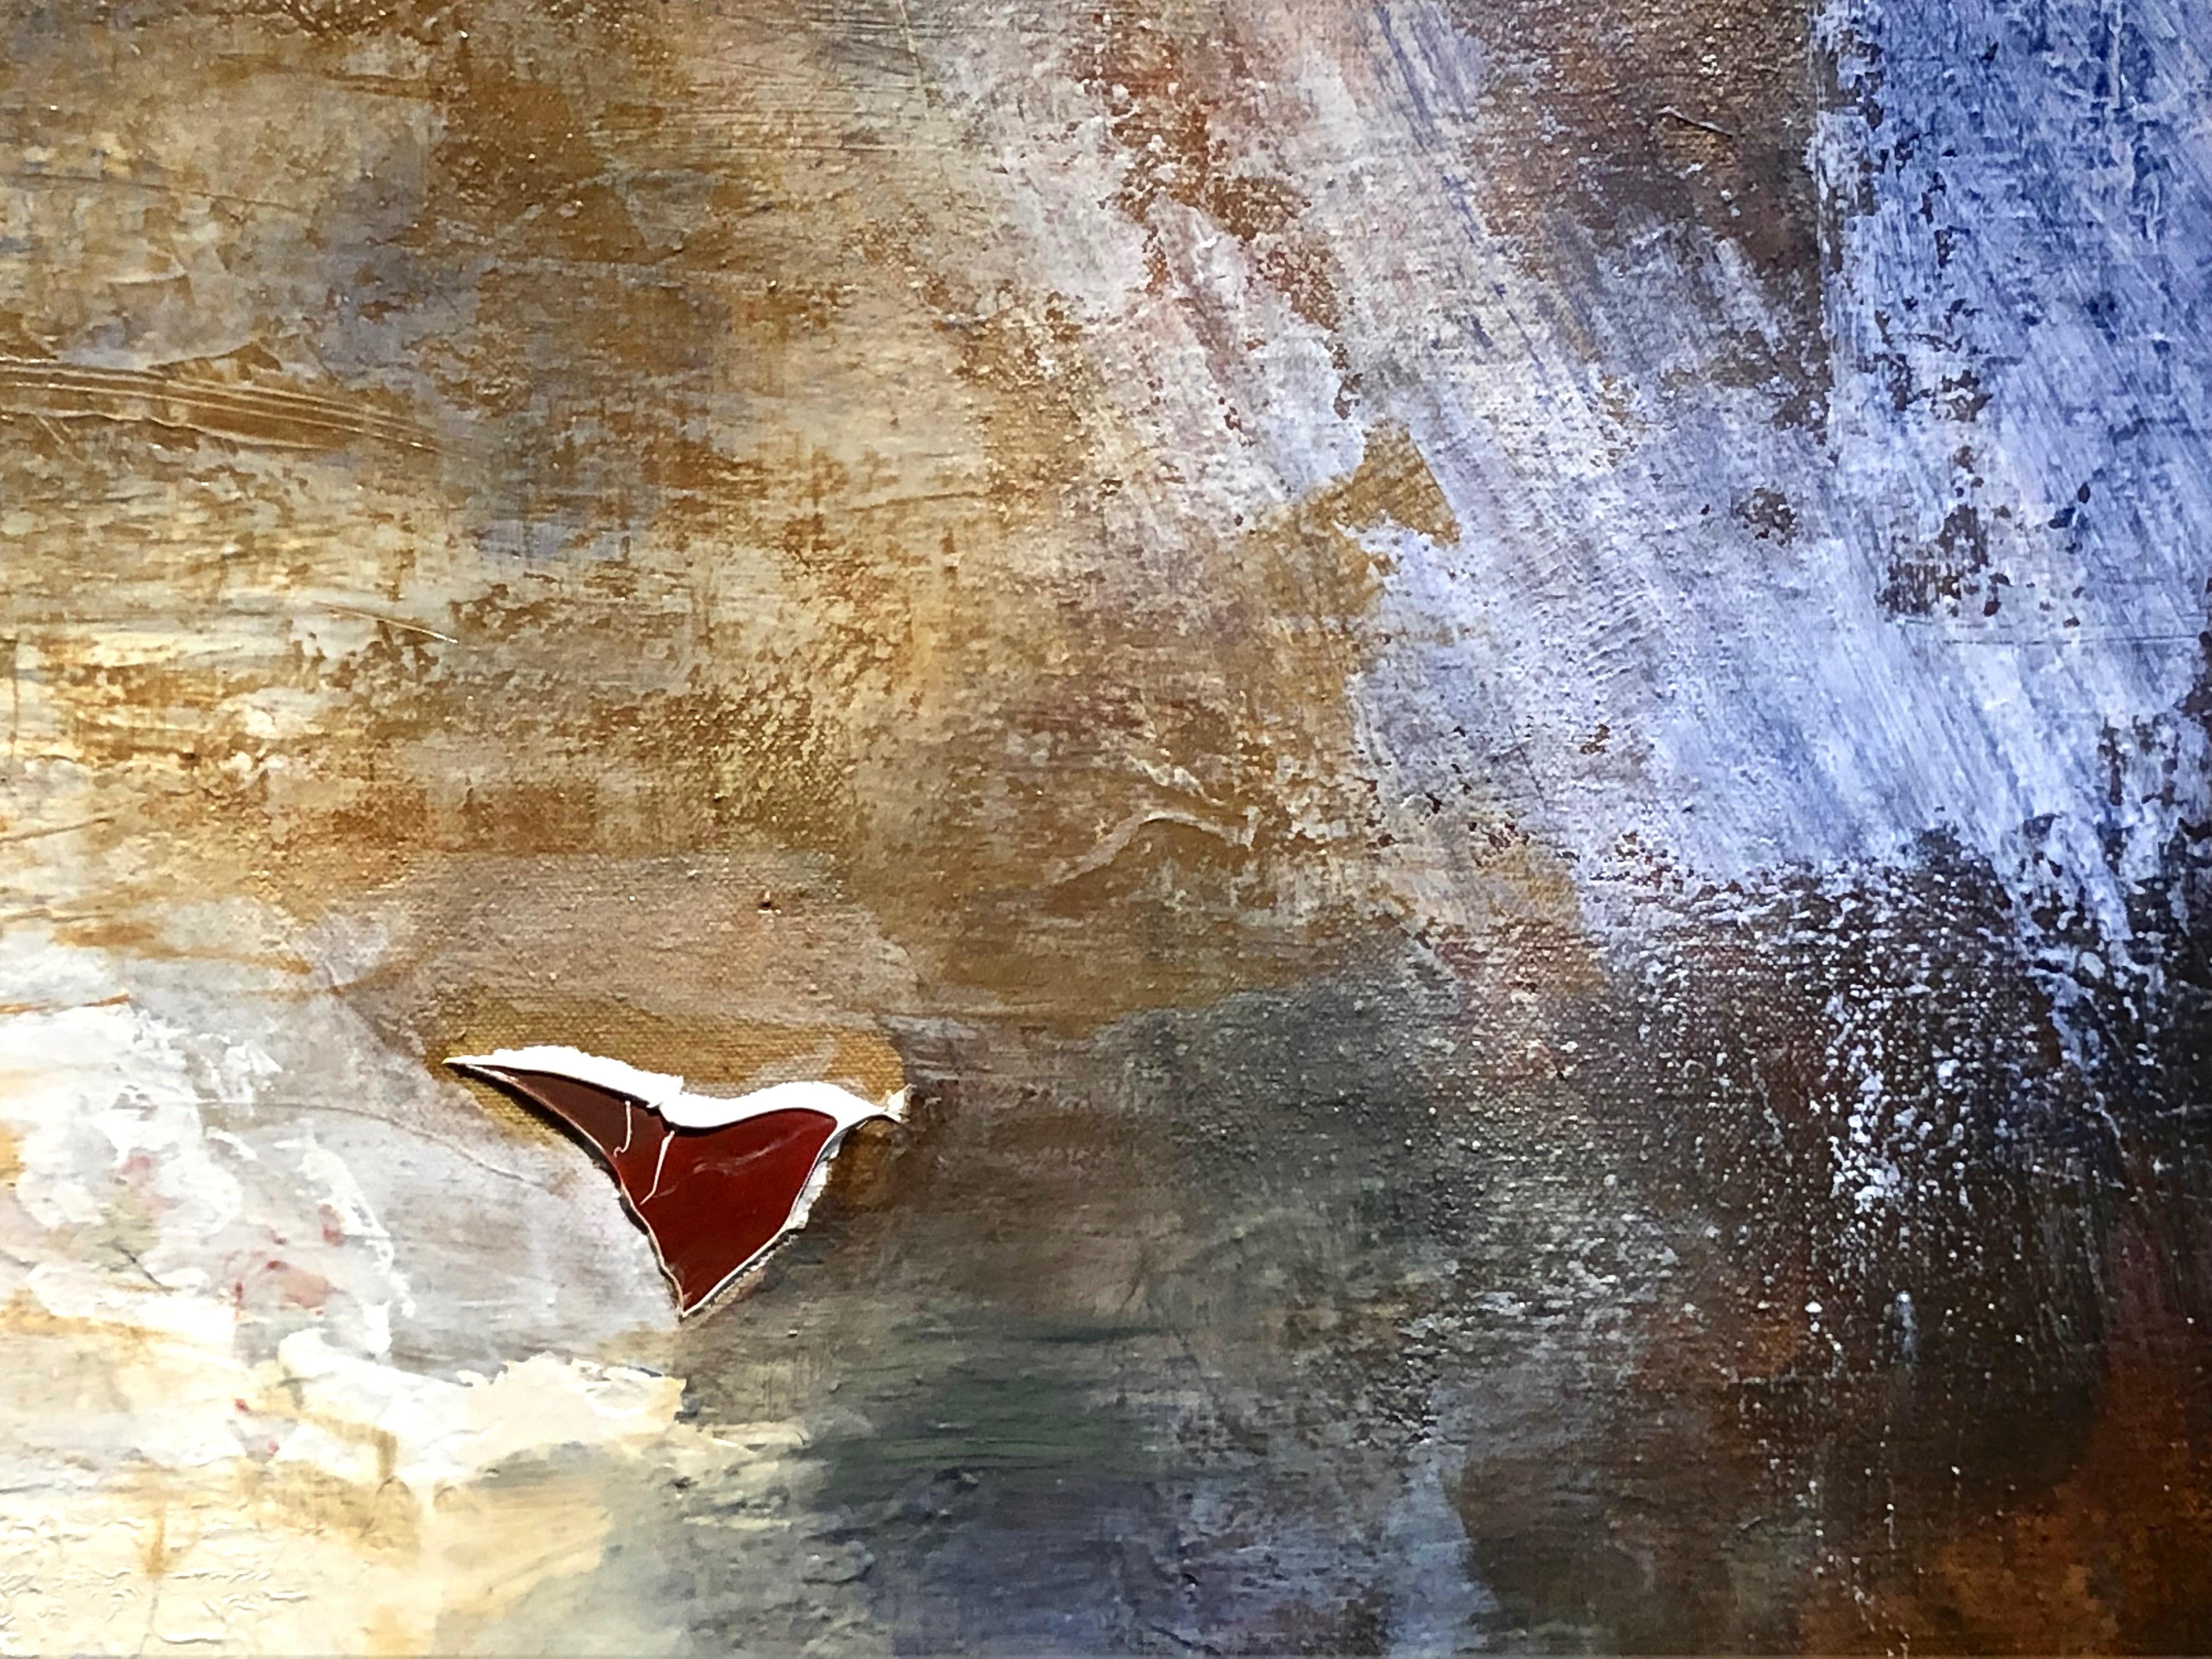 Artist: Andrei Petrov
Title: Round Trip
Medium: Oil on canvas
Size 36 x 48 inches 

Petrov's 